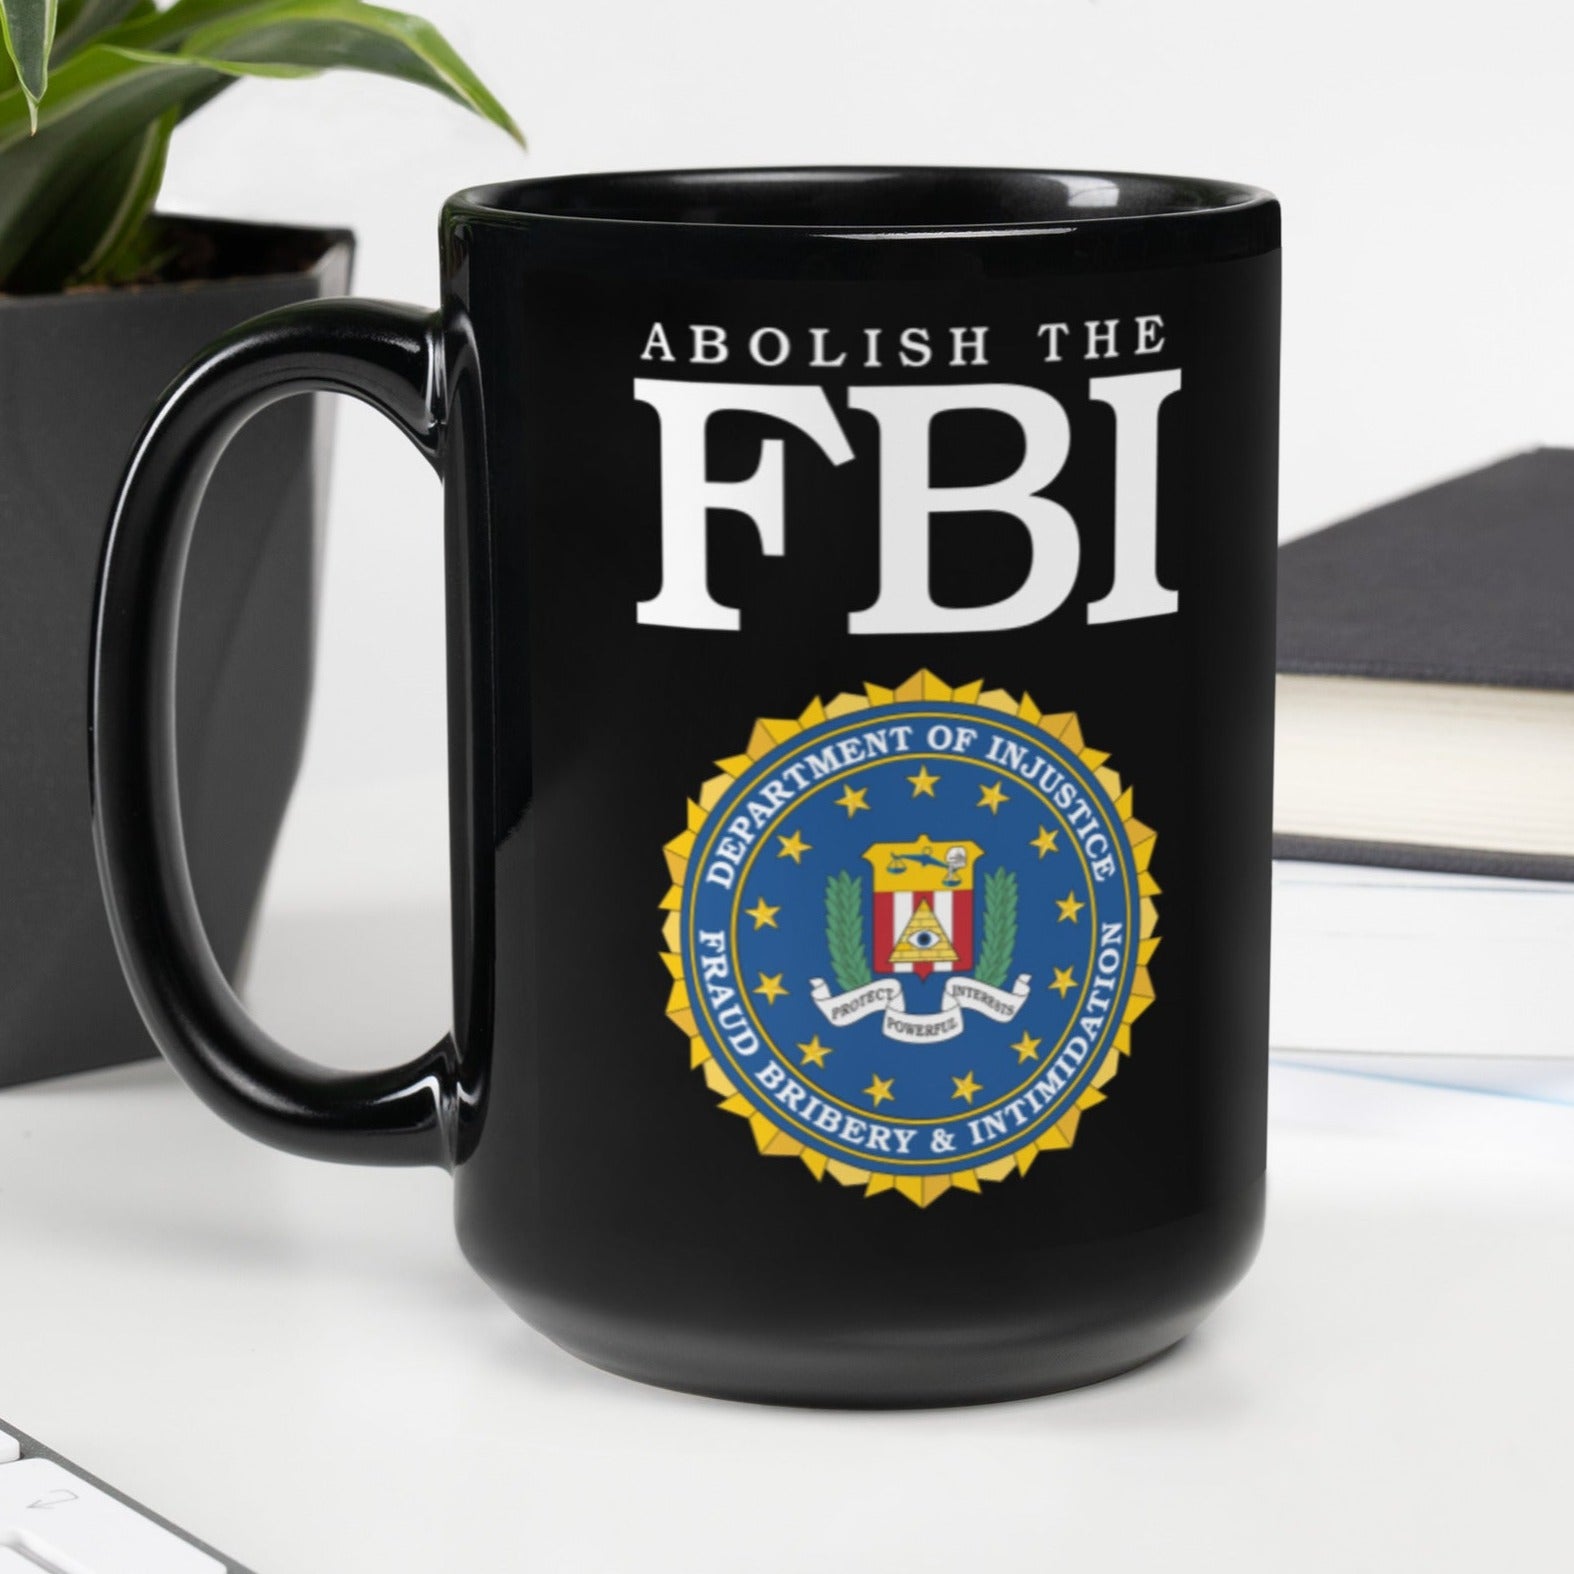 Abolish the FBI Mug